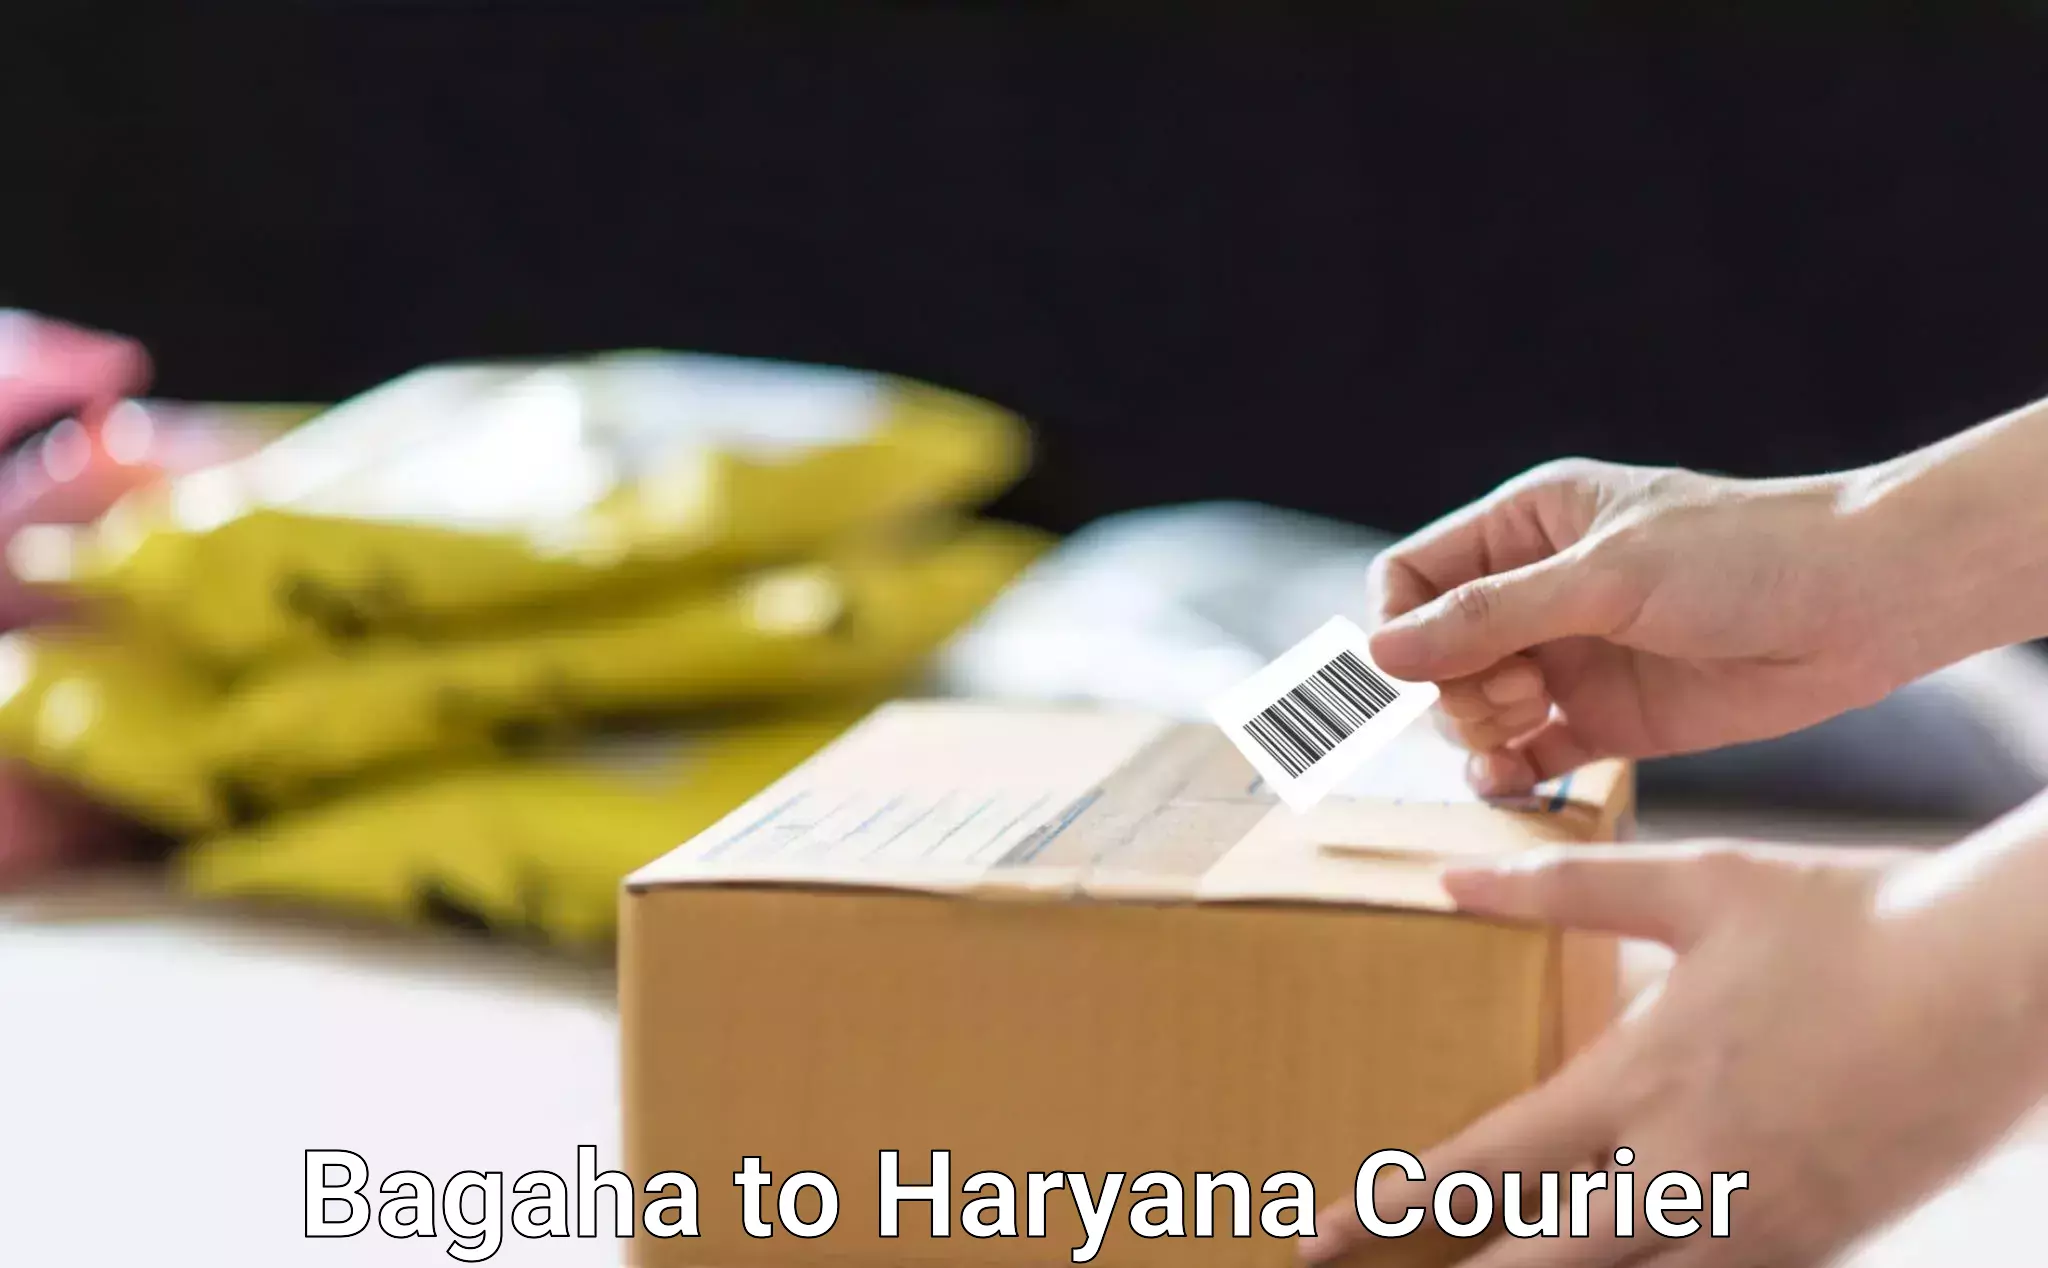 Trusted moving company Bagaha to Haryana